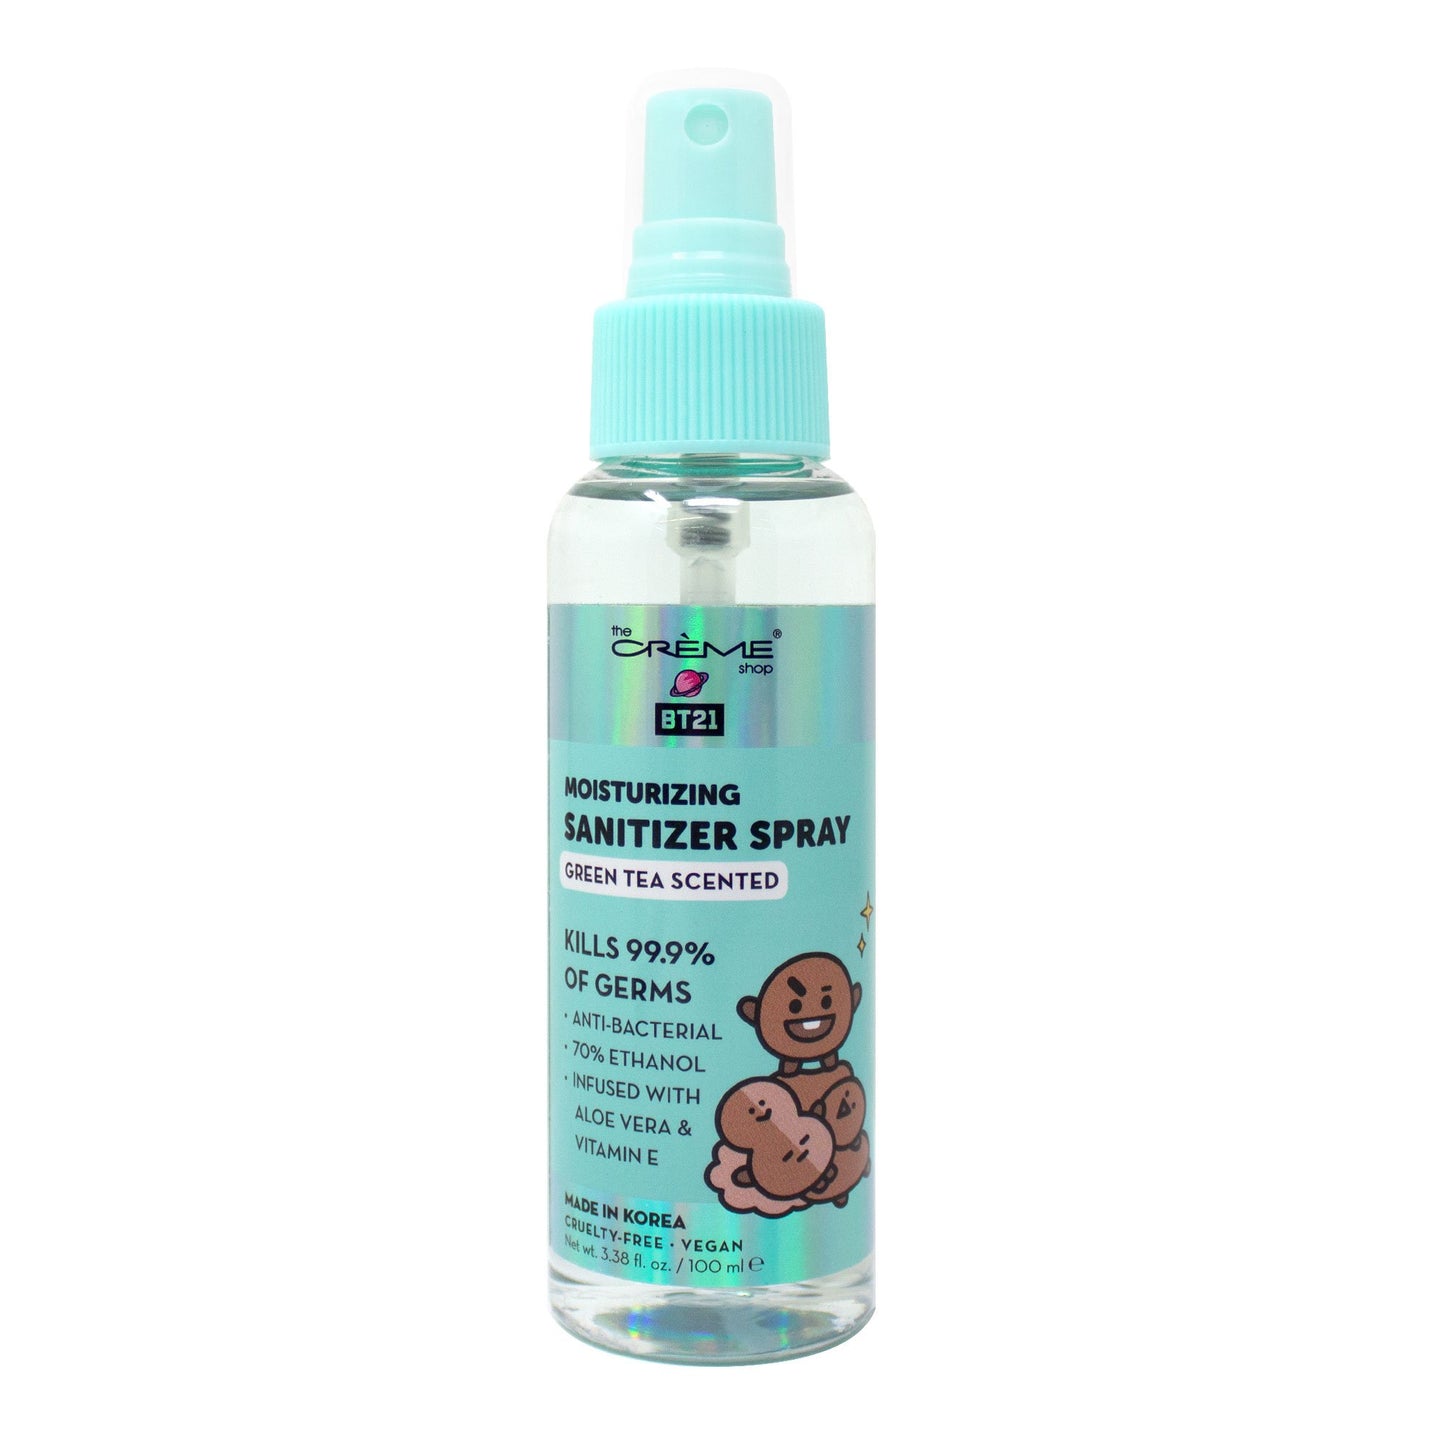 SHOOKY Sanitizing Spray (Green Tea Scented) Sanitizer Sprays - The Crème Shop x BT21 